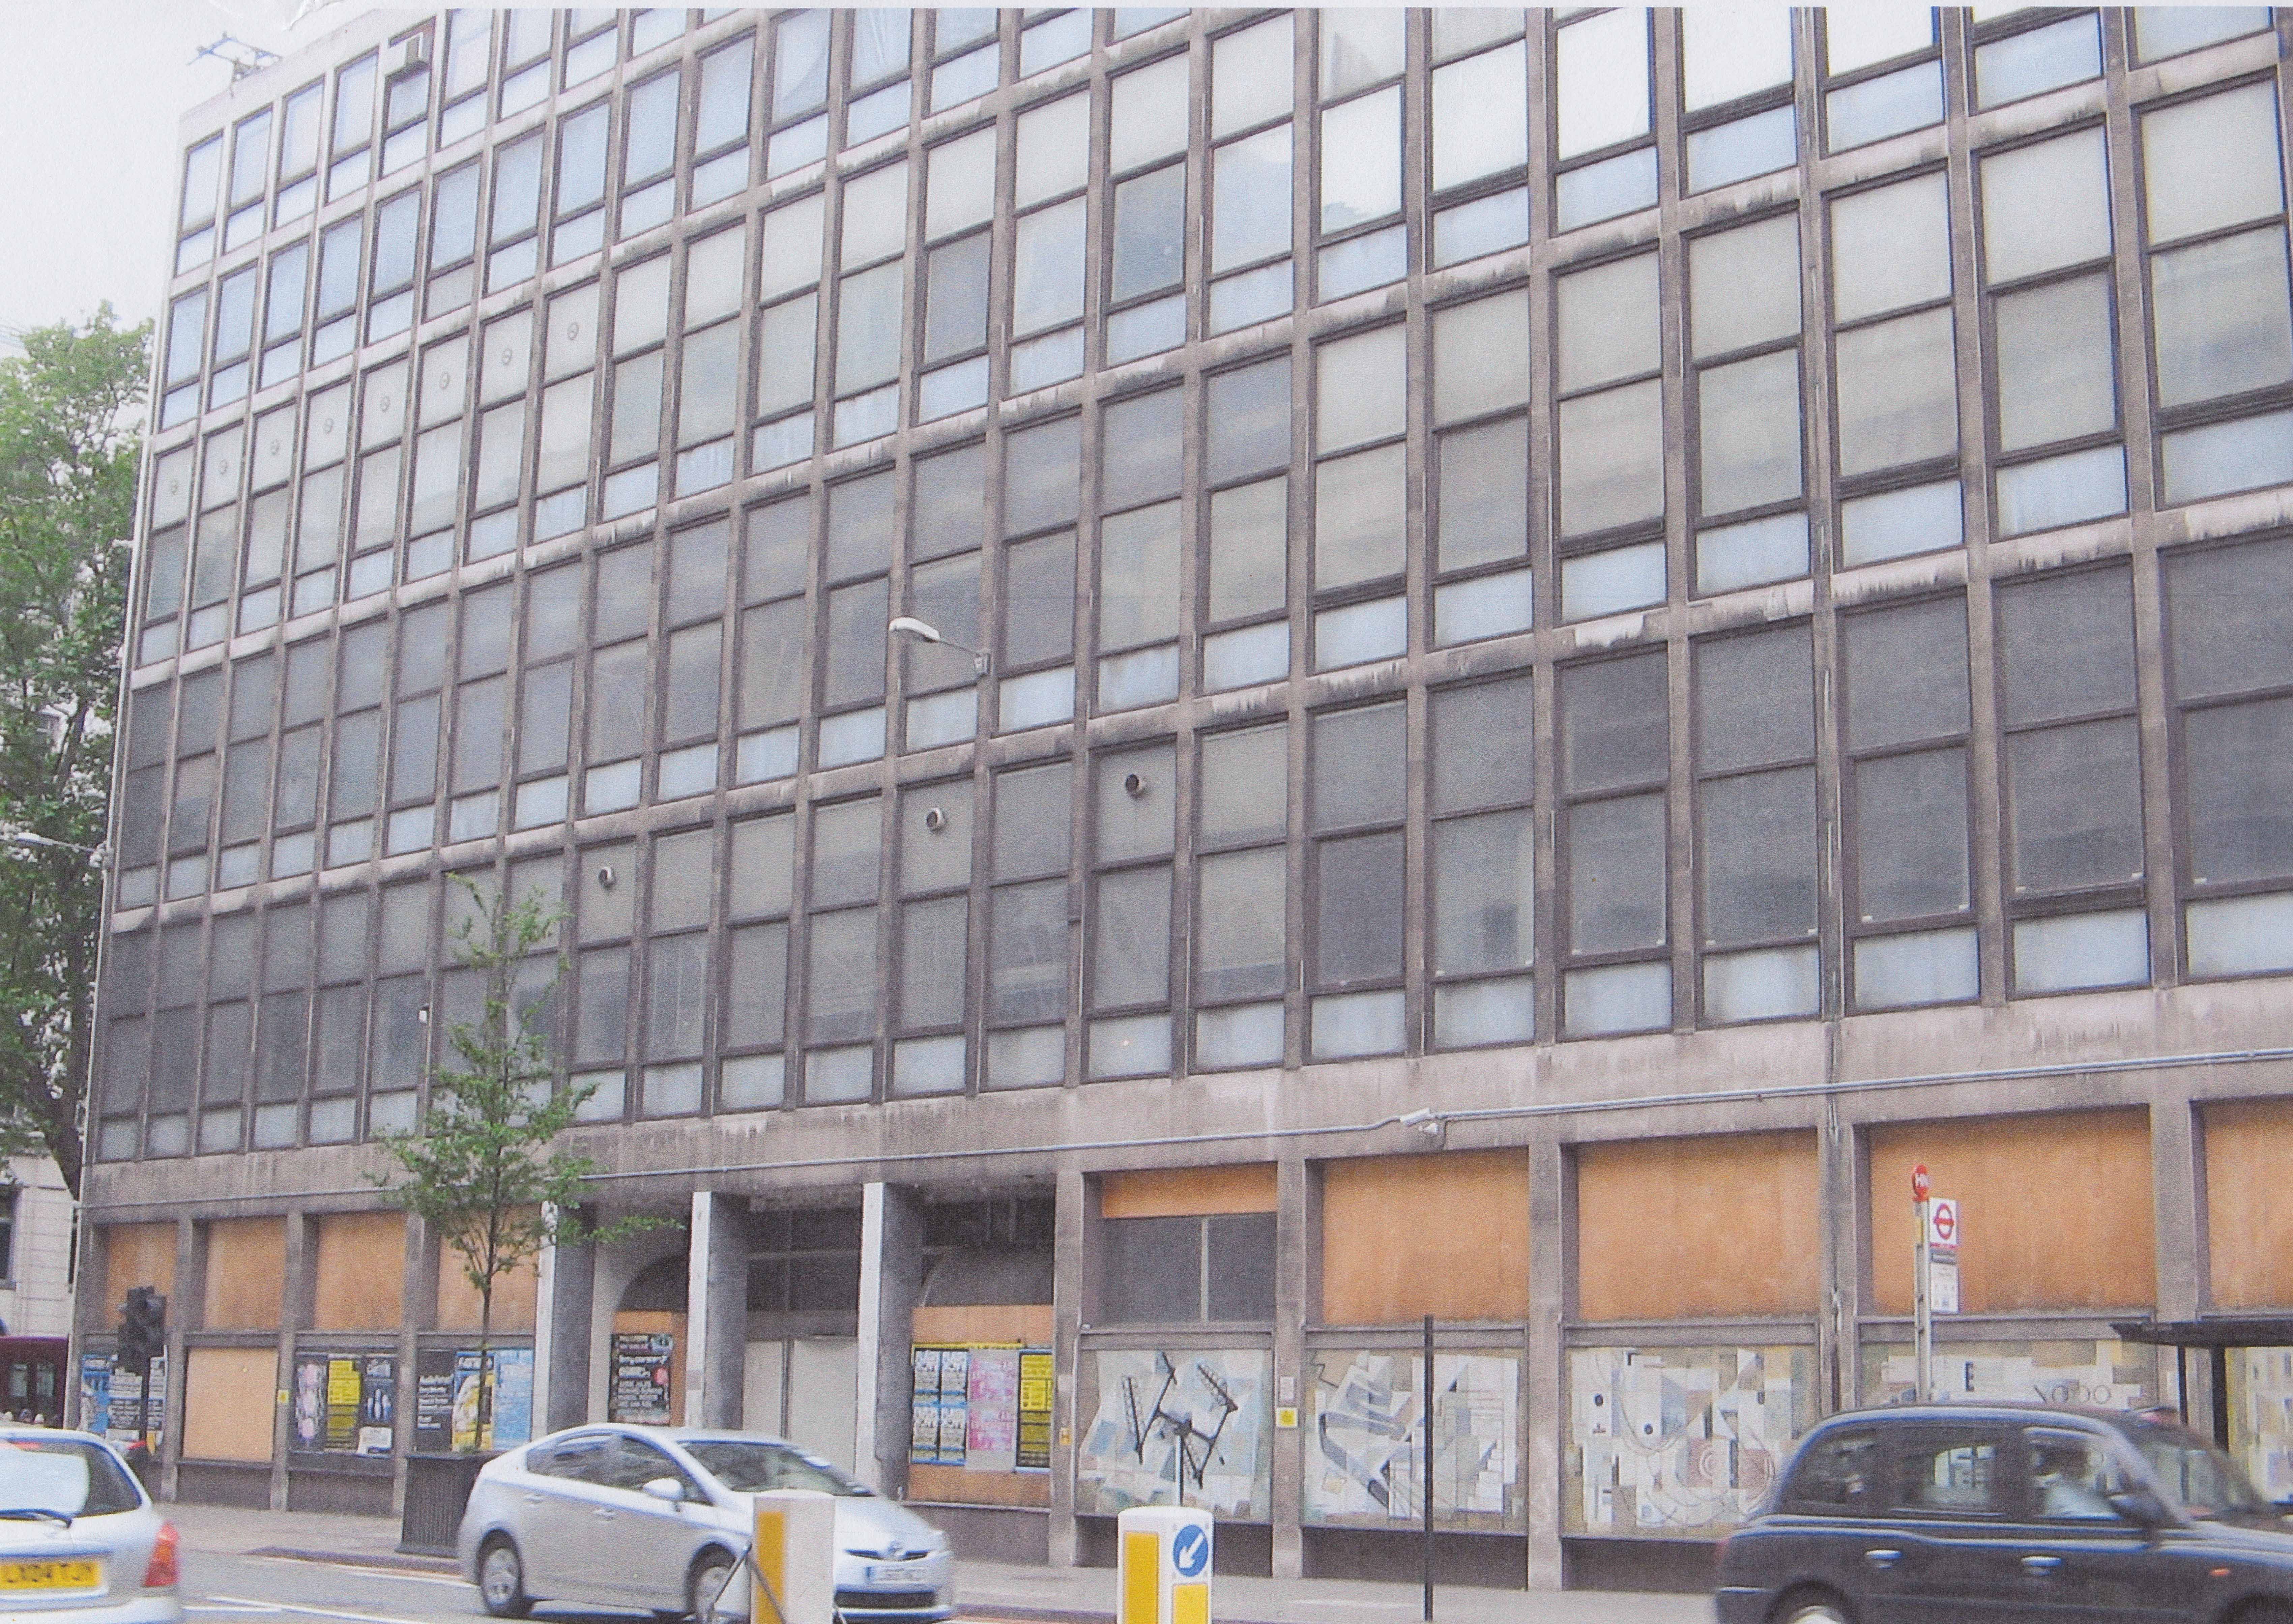 On Farringdon Street - awaiting demolition